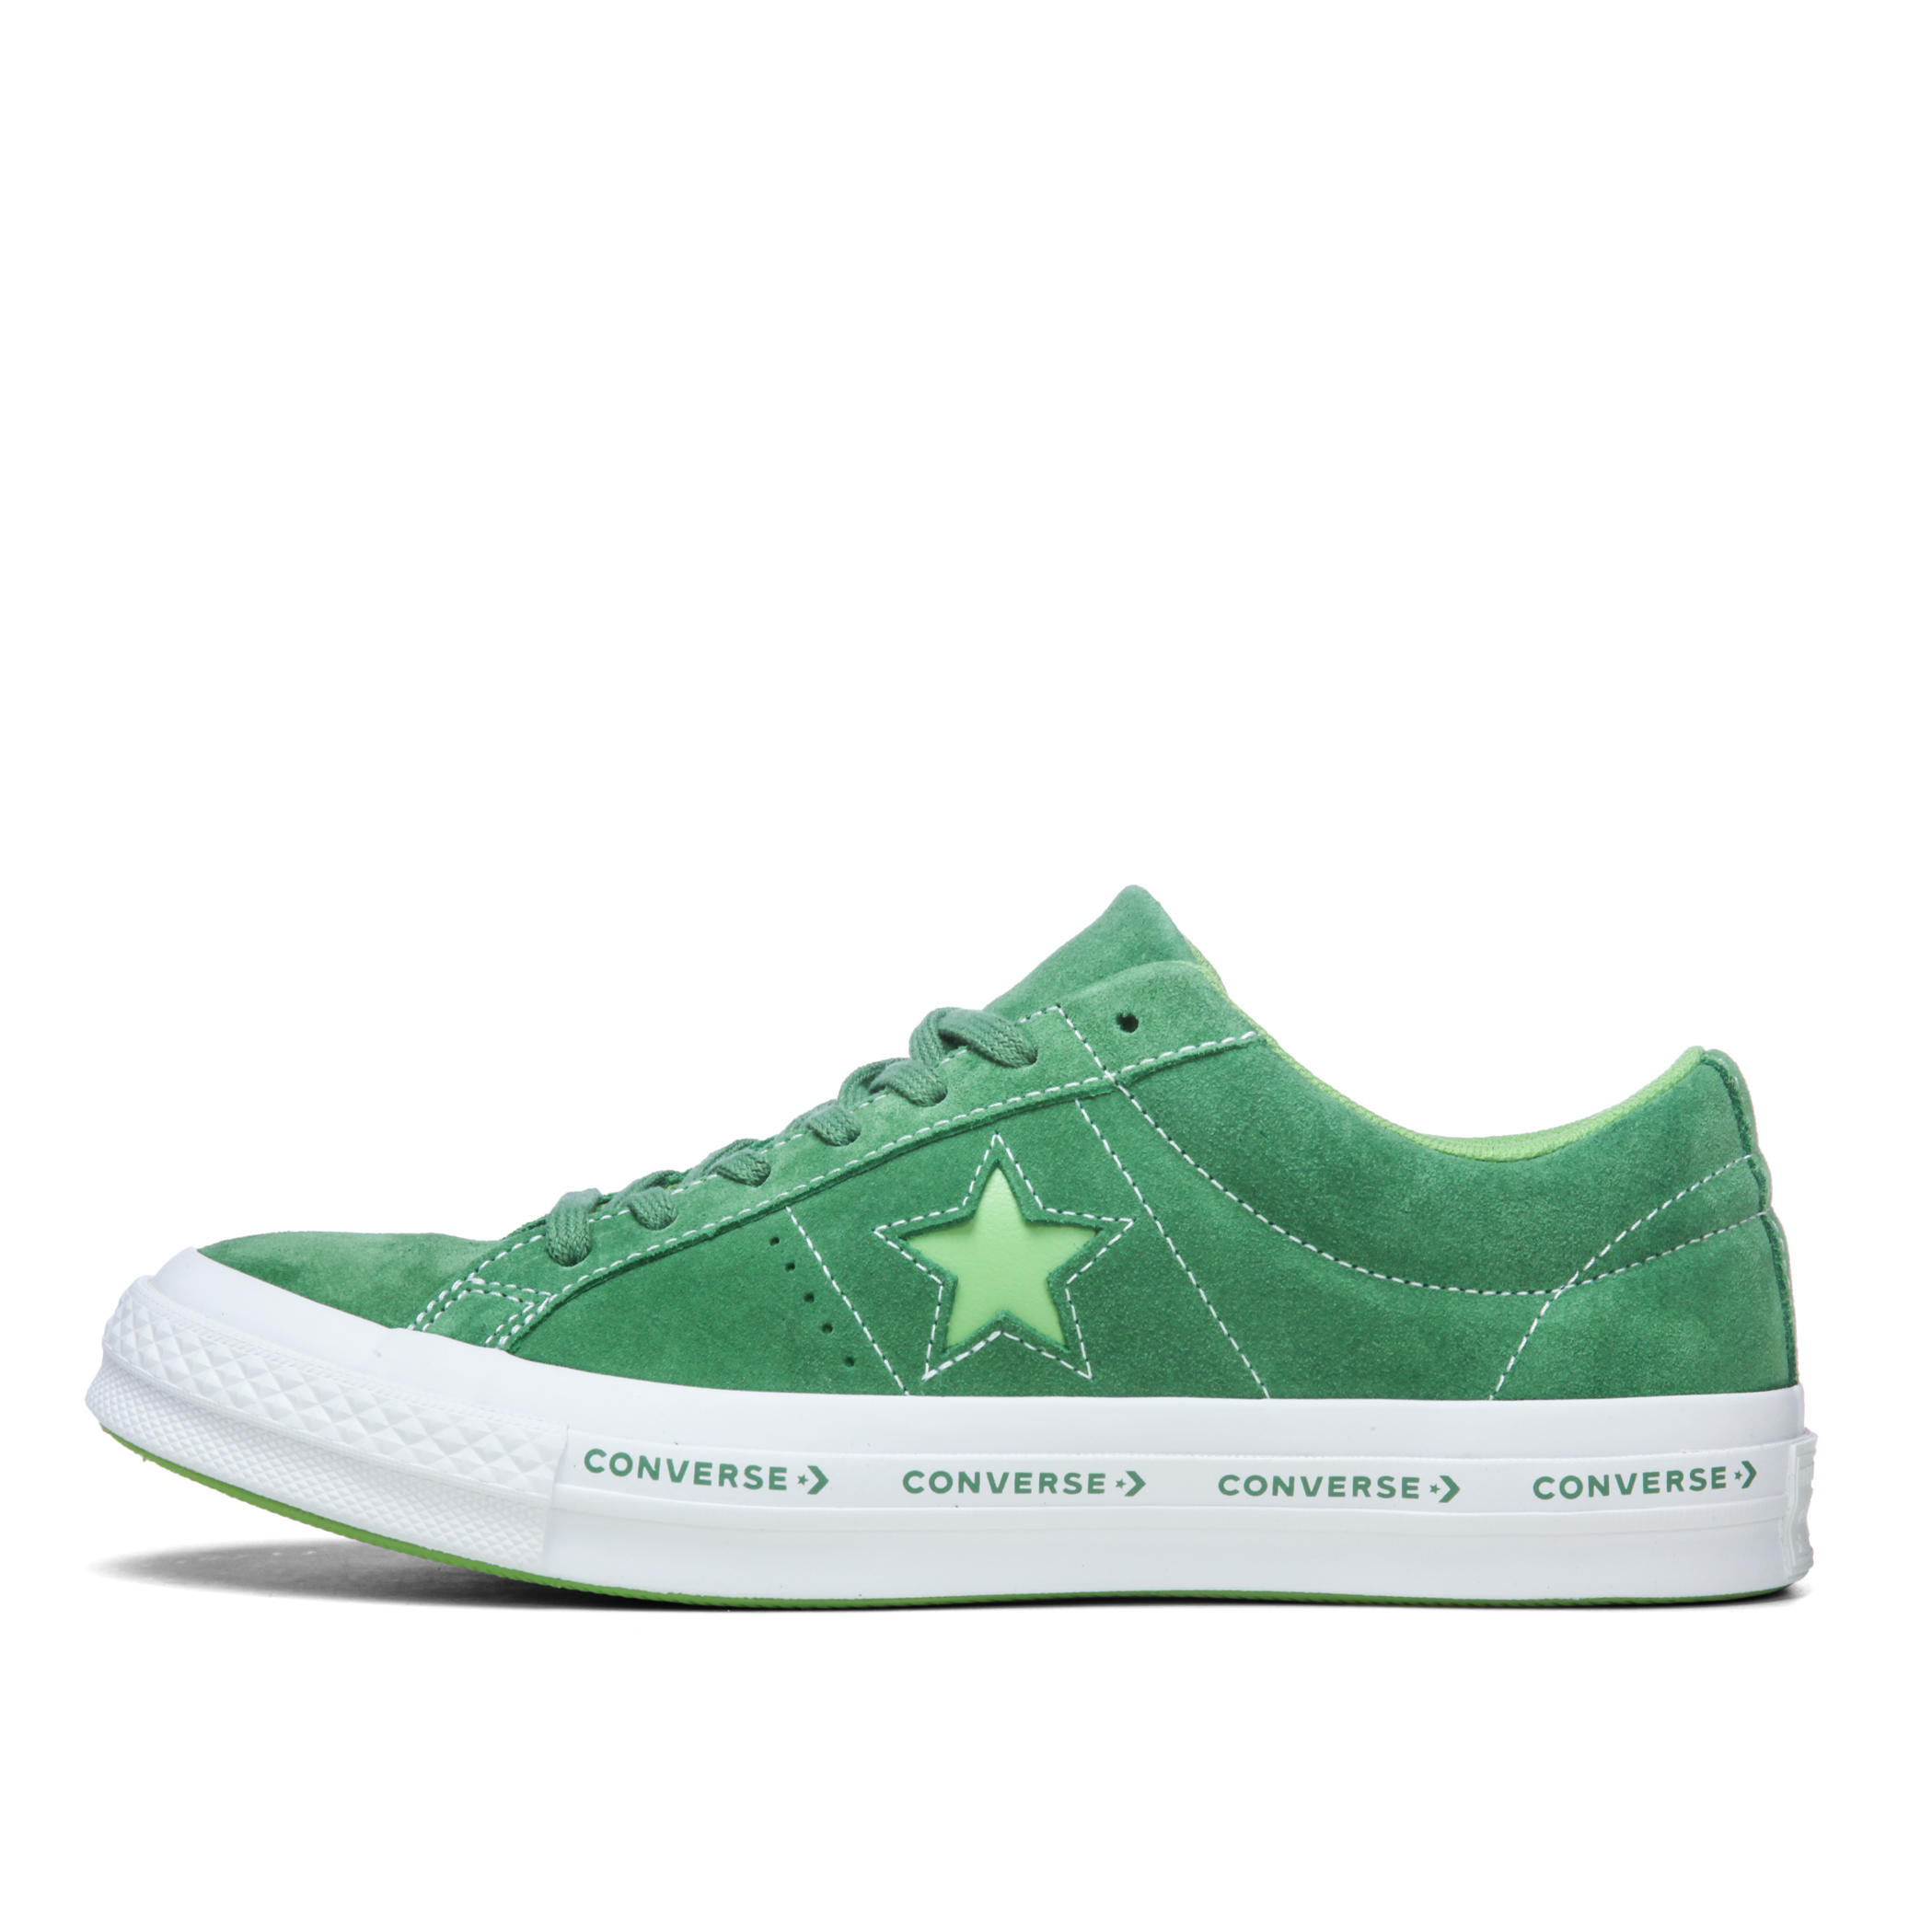 converse green star